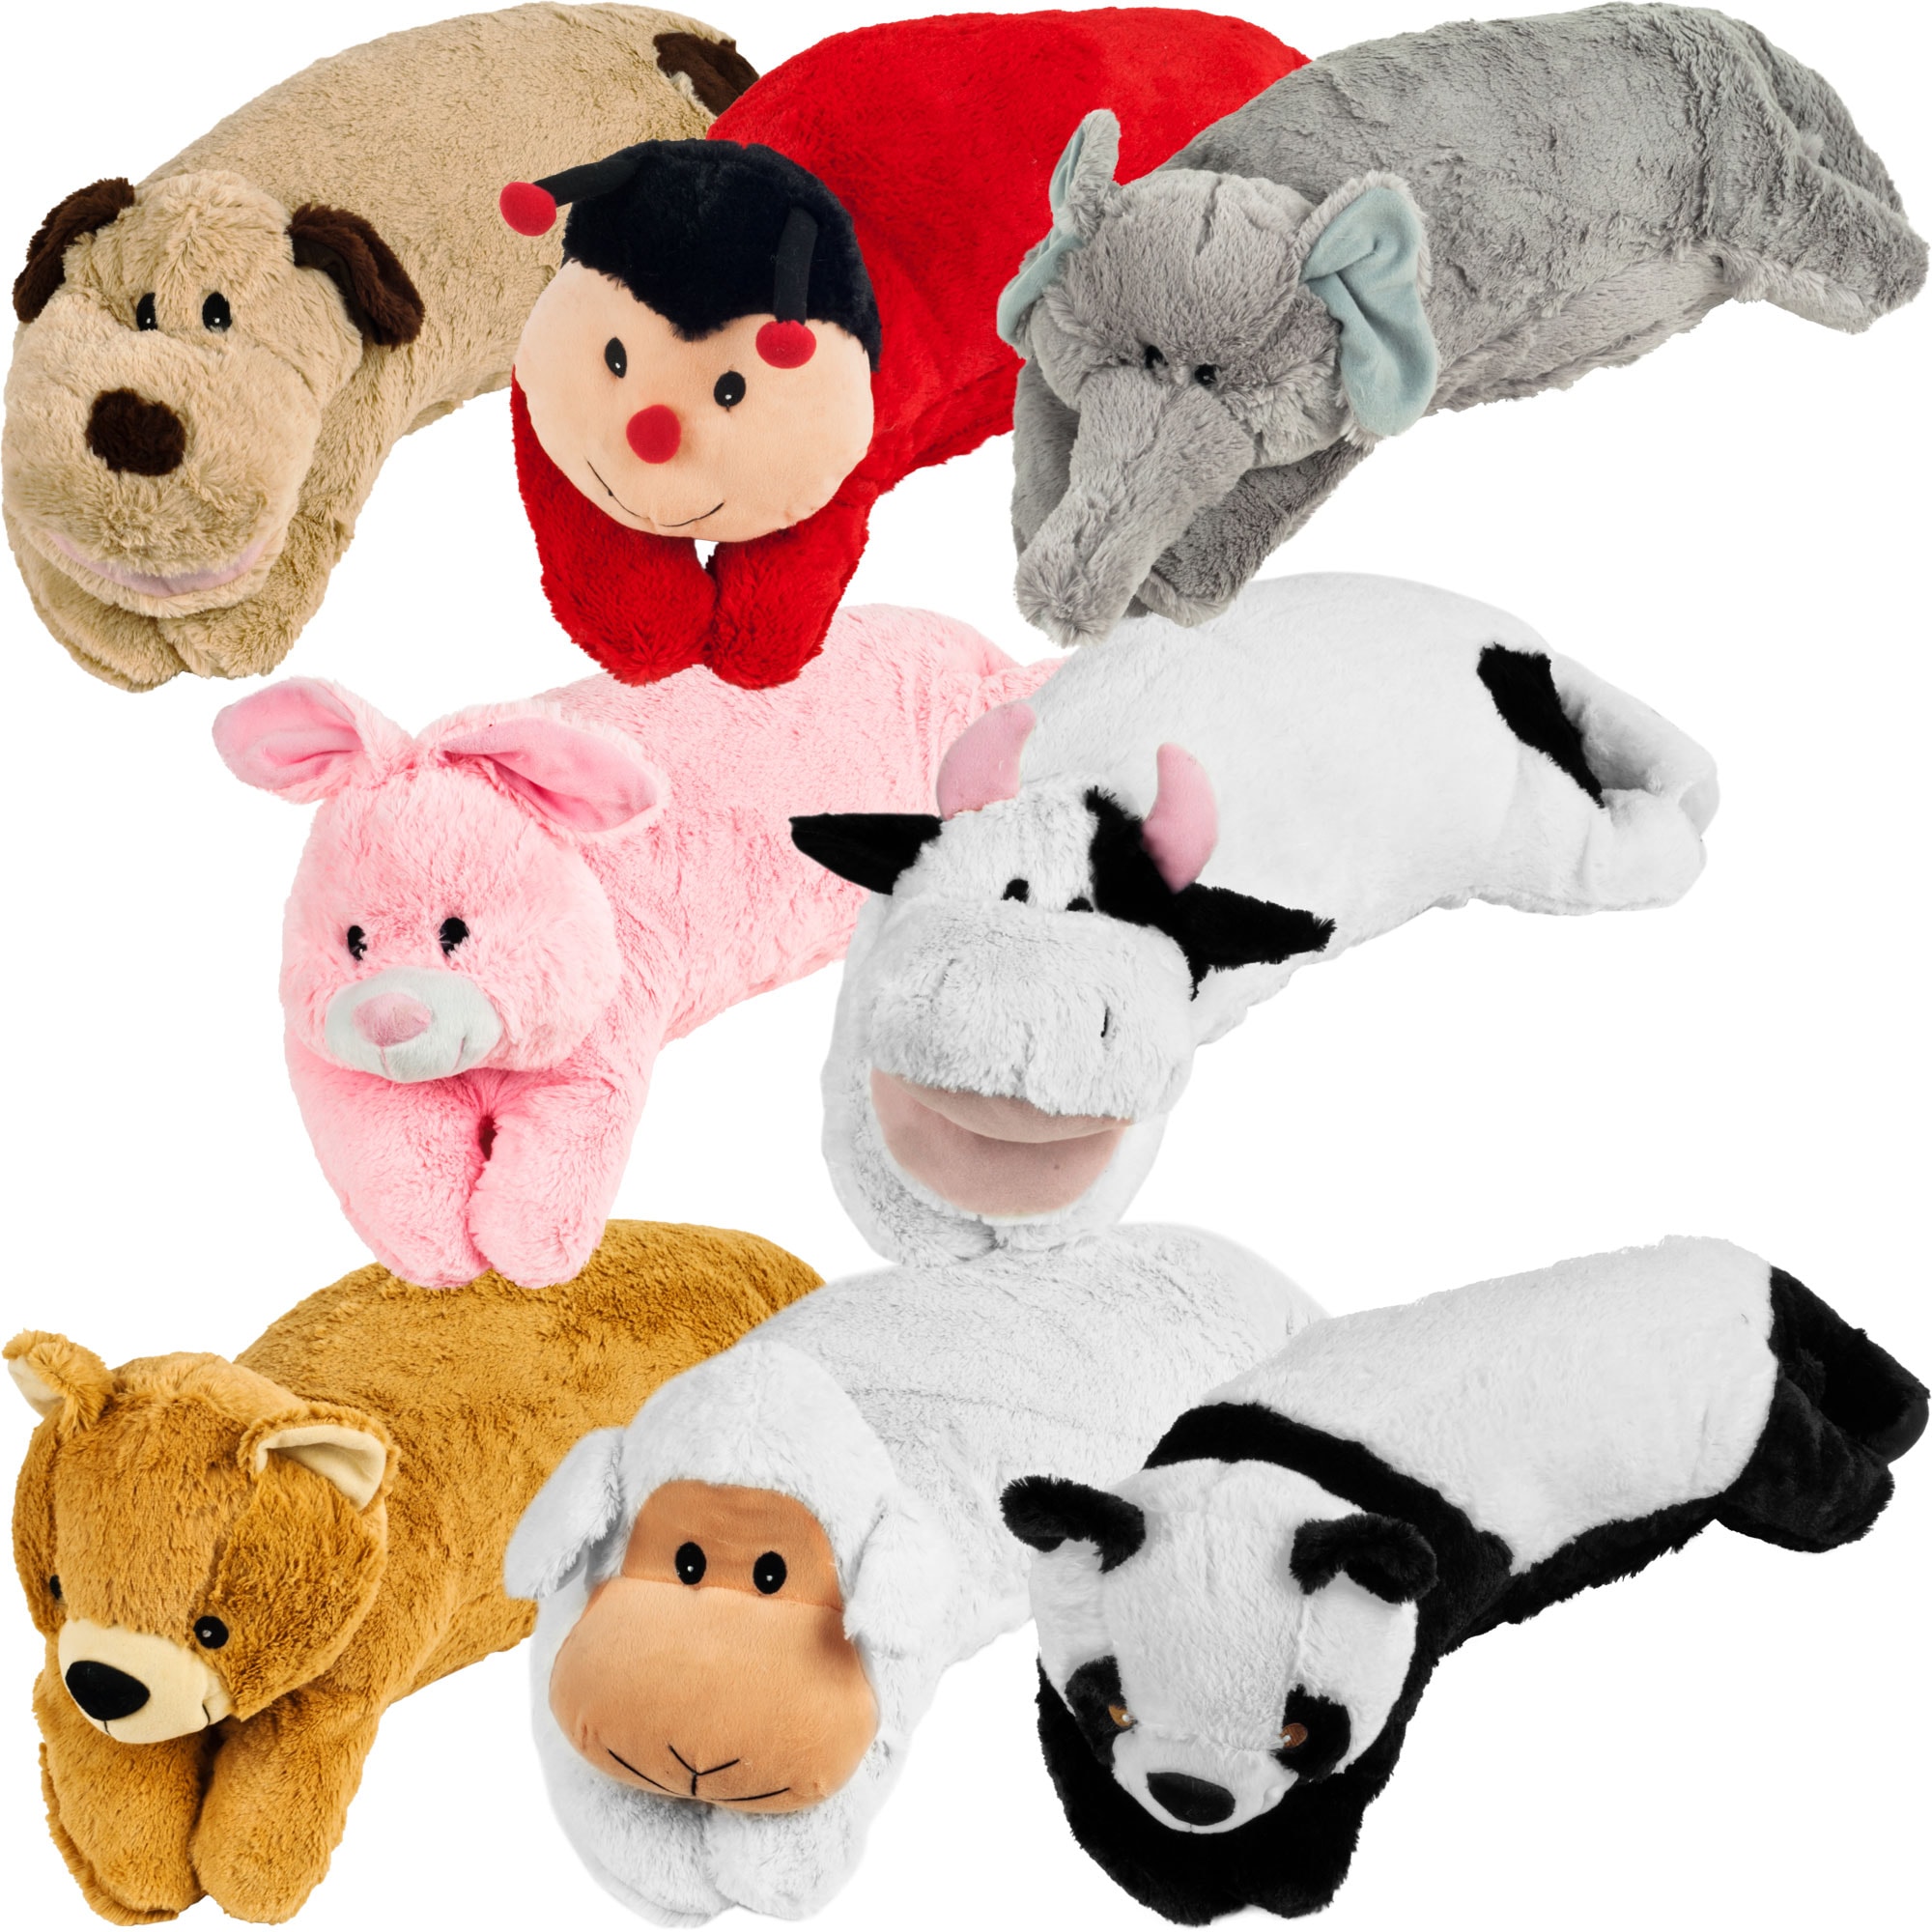 large stuffed animal pillows